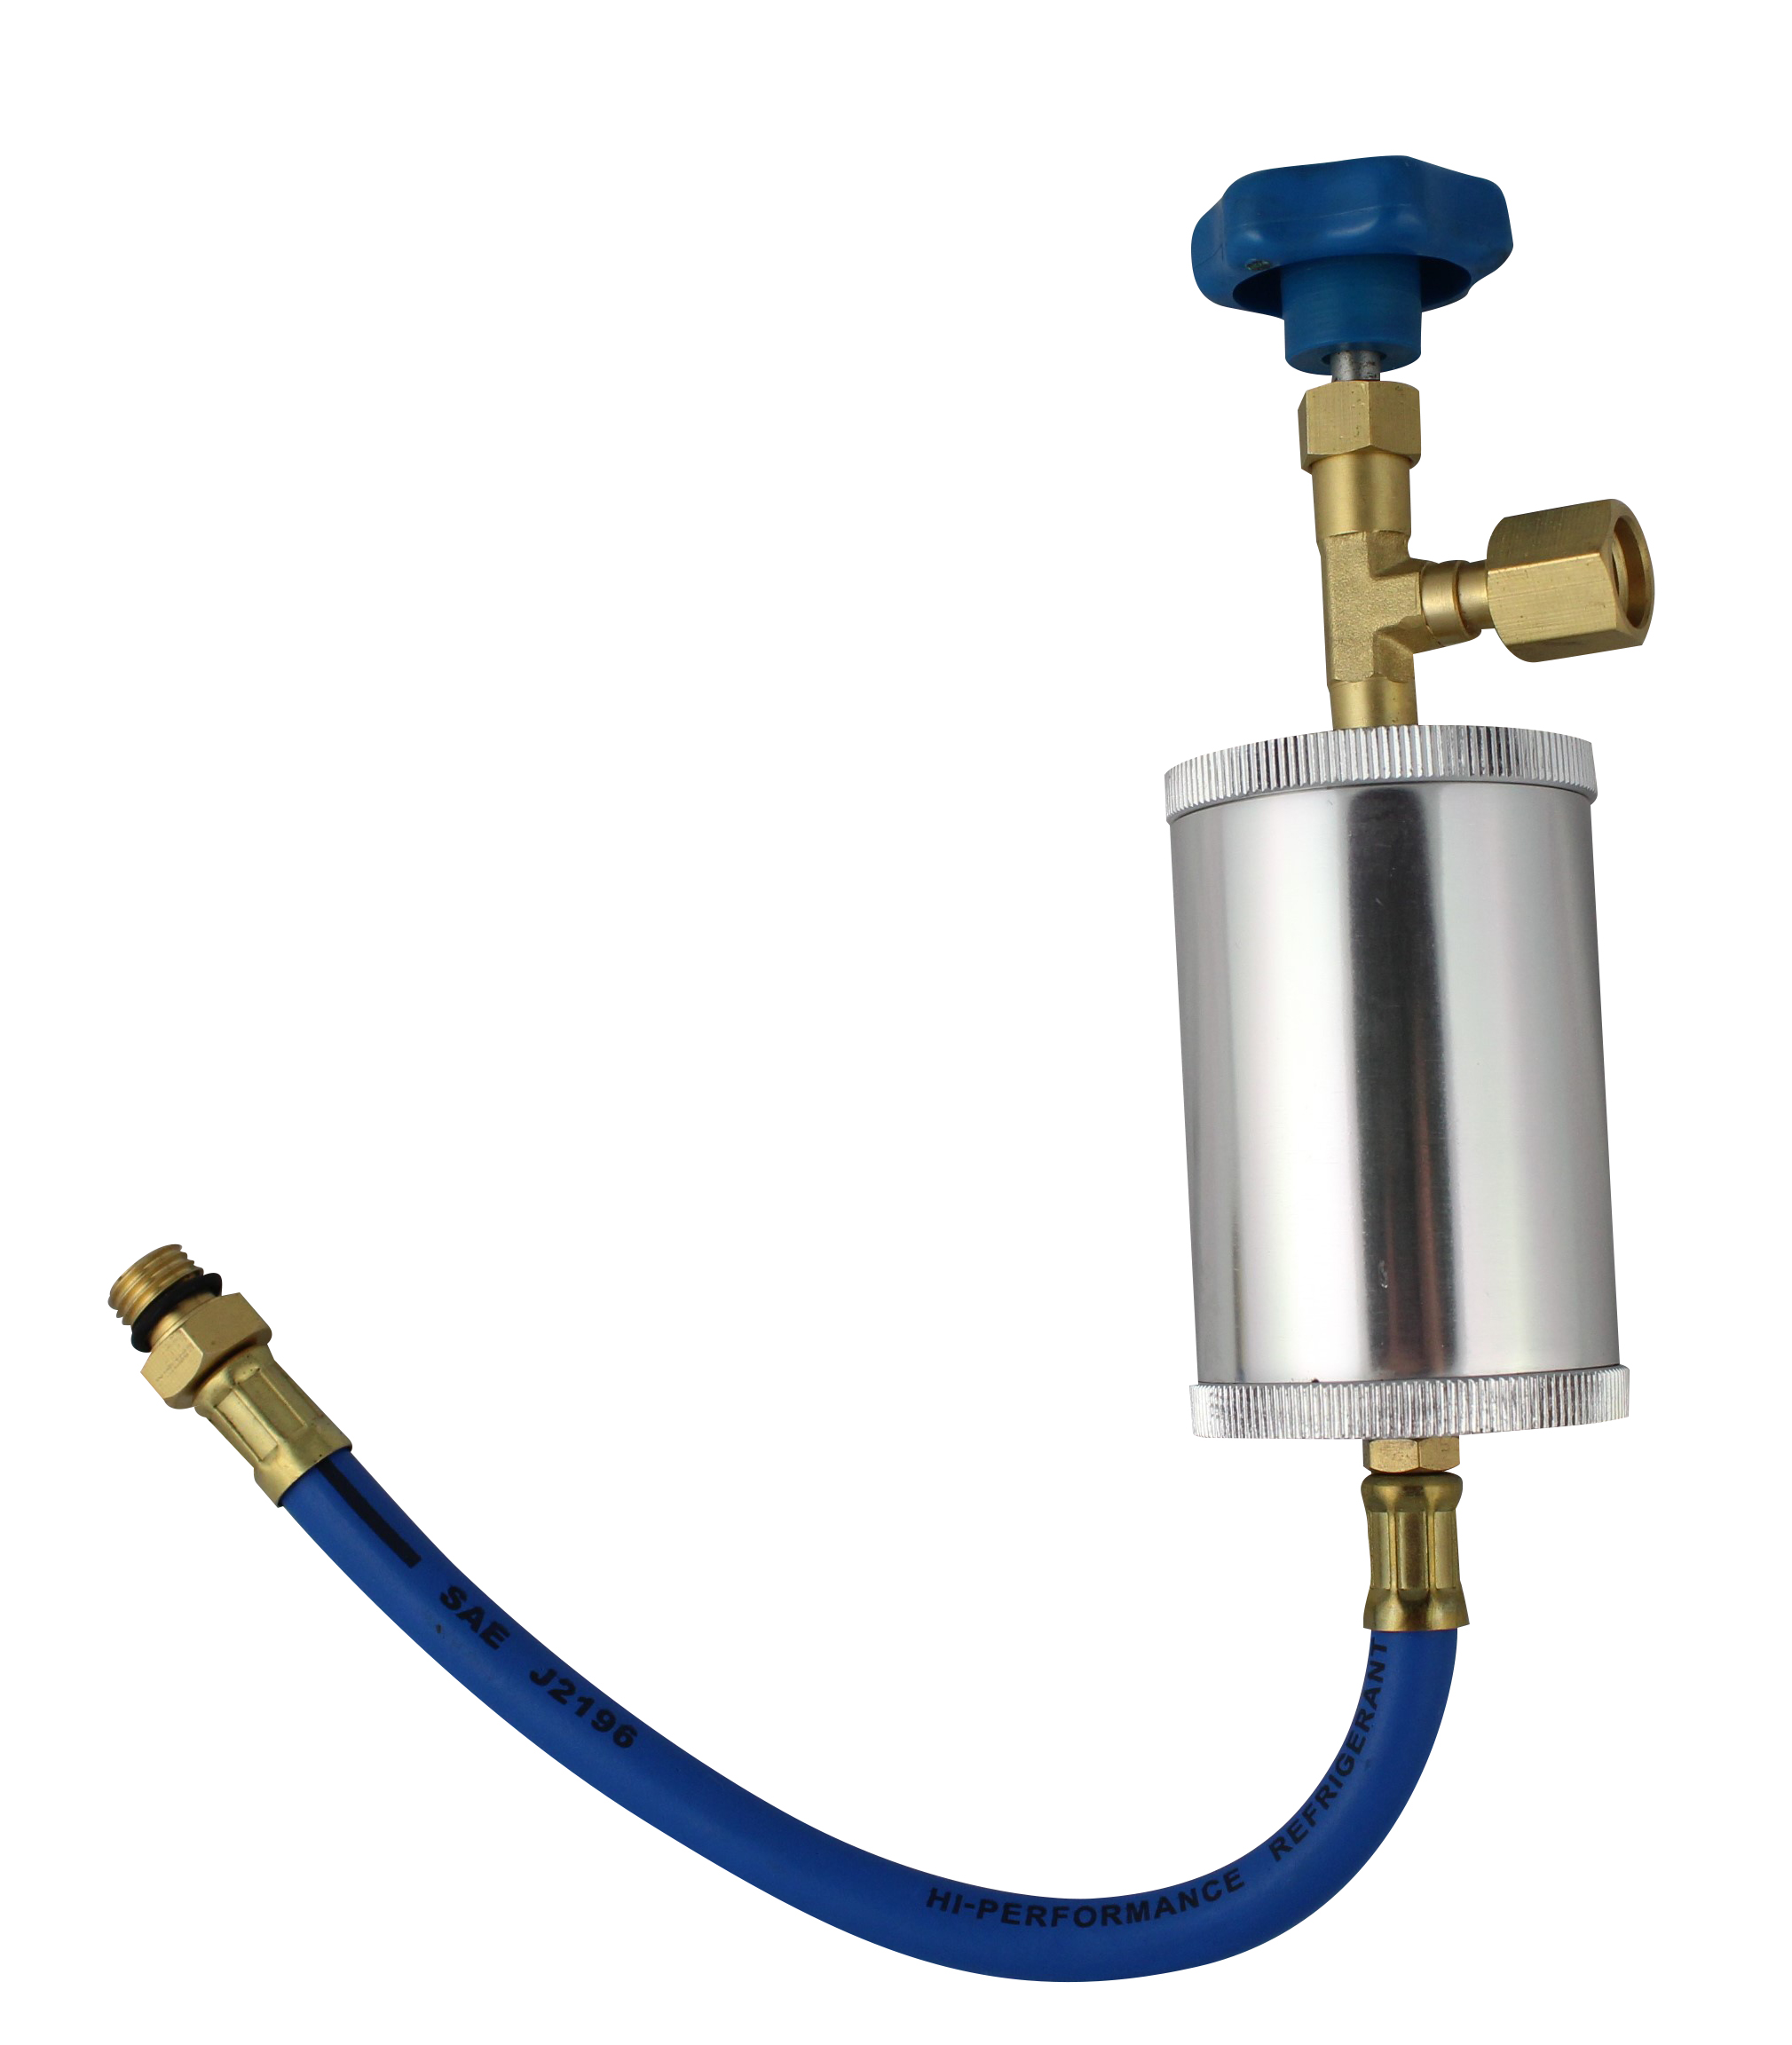 R-1234yf Vacuum Pump and Gauge Set Assortment FJC a/c system